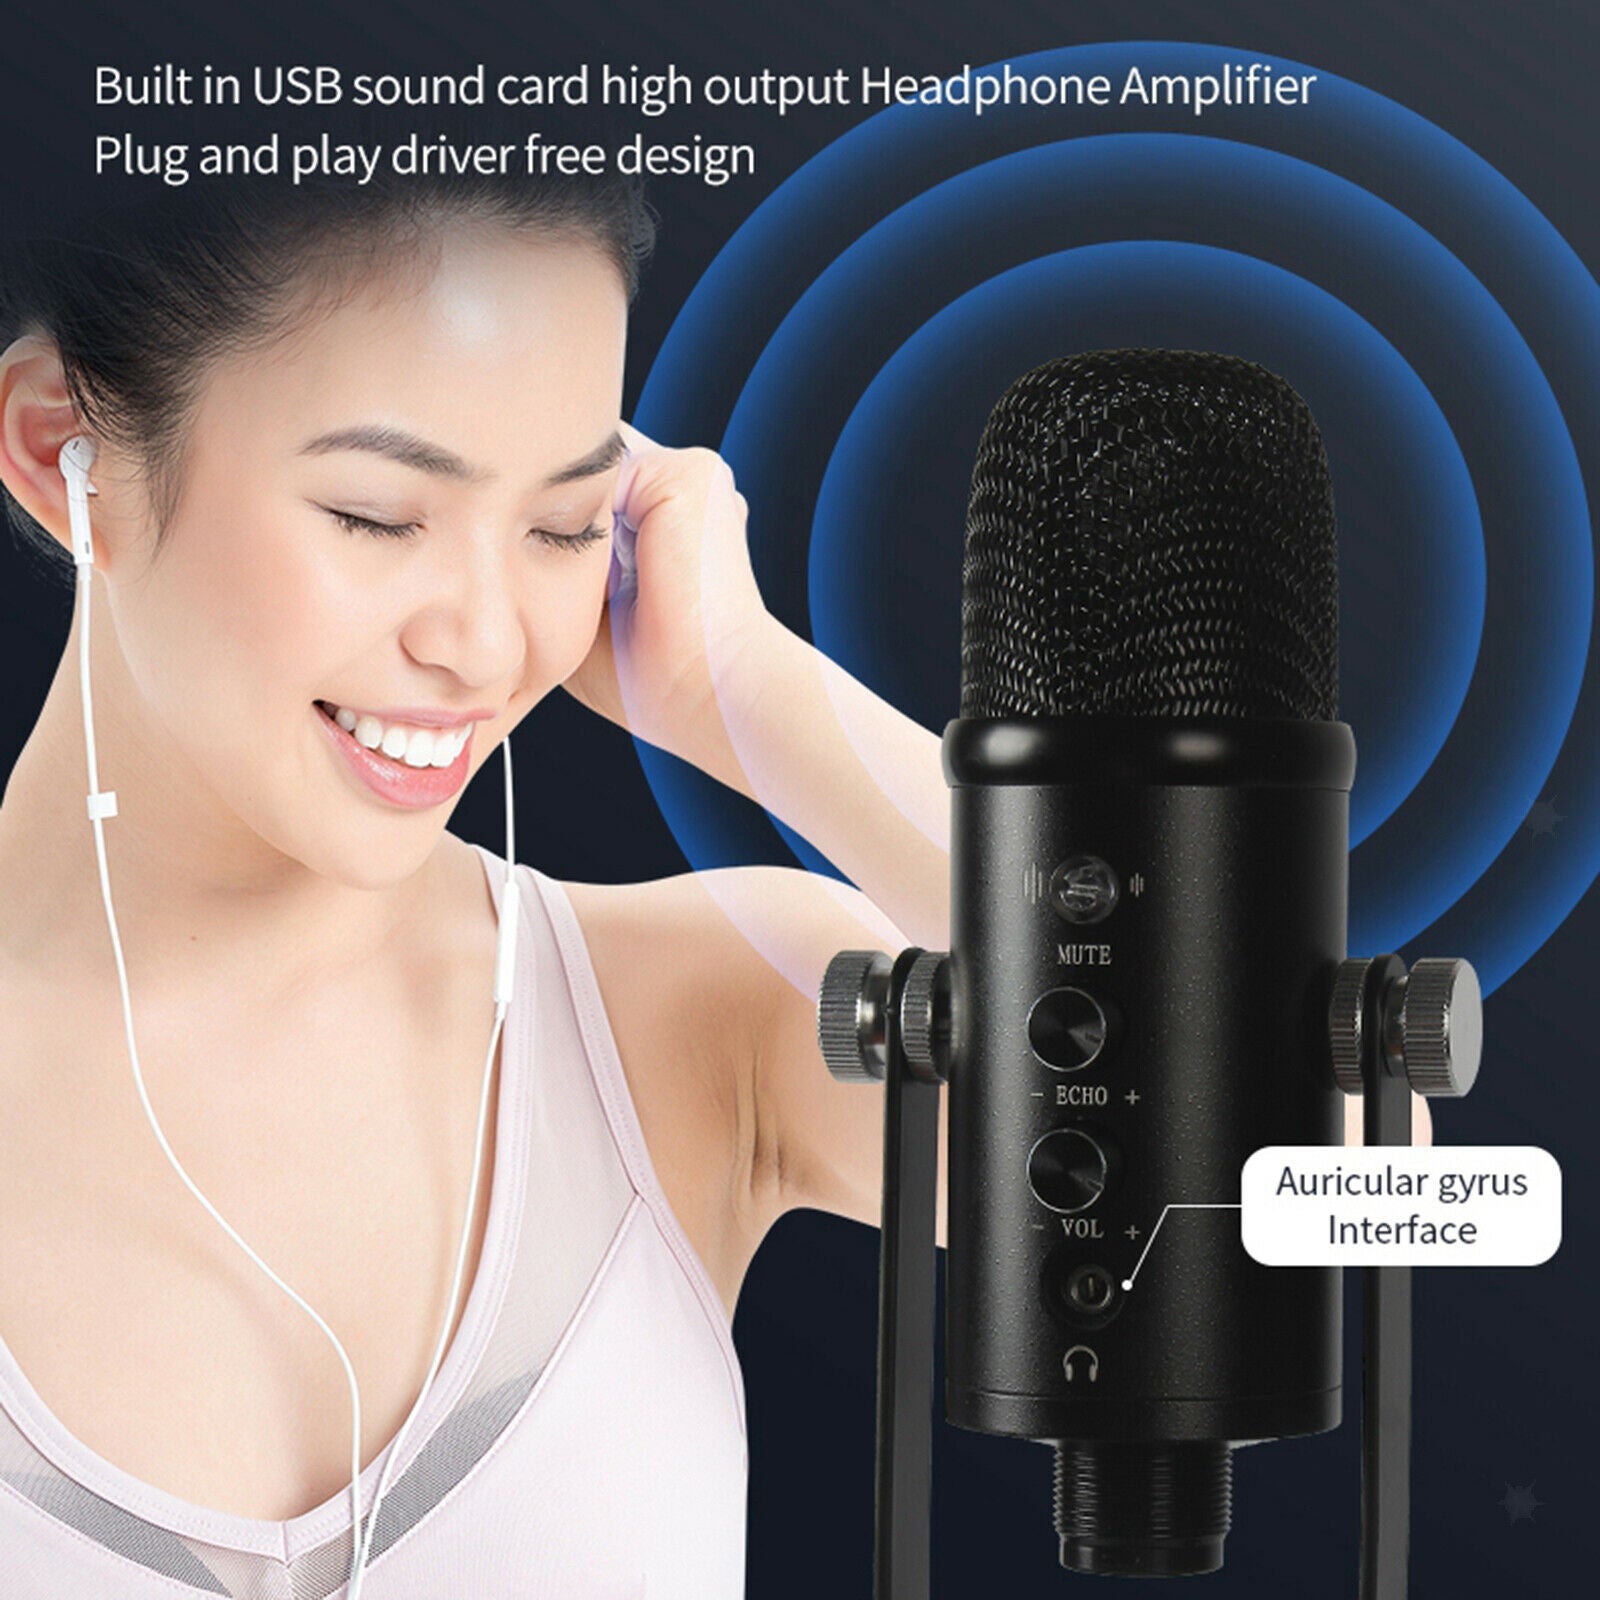 USB Condenser Microphone Kit Studio Broadcast Sound Recording Desk Stand